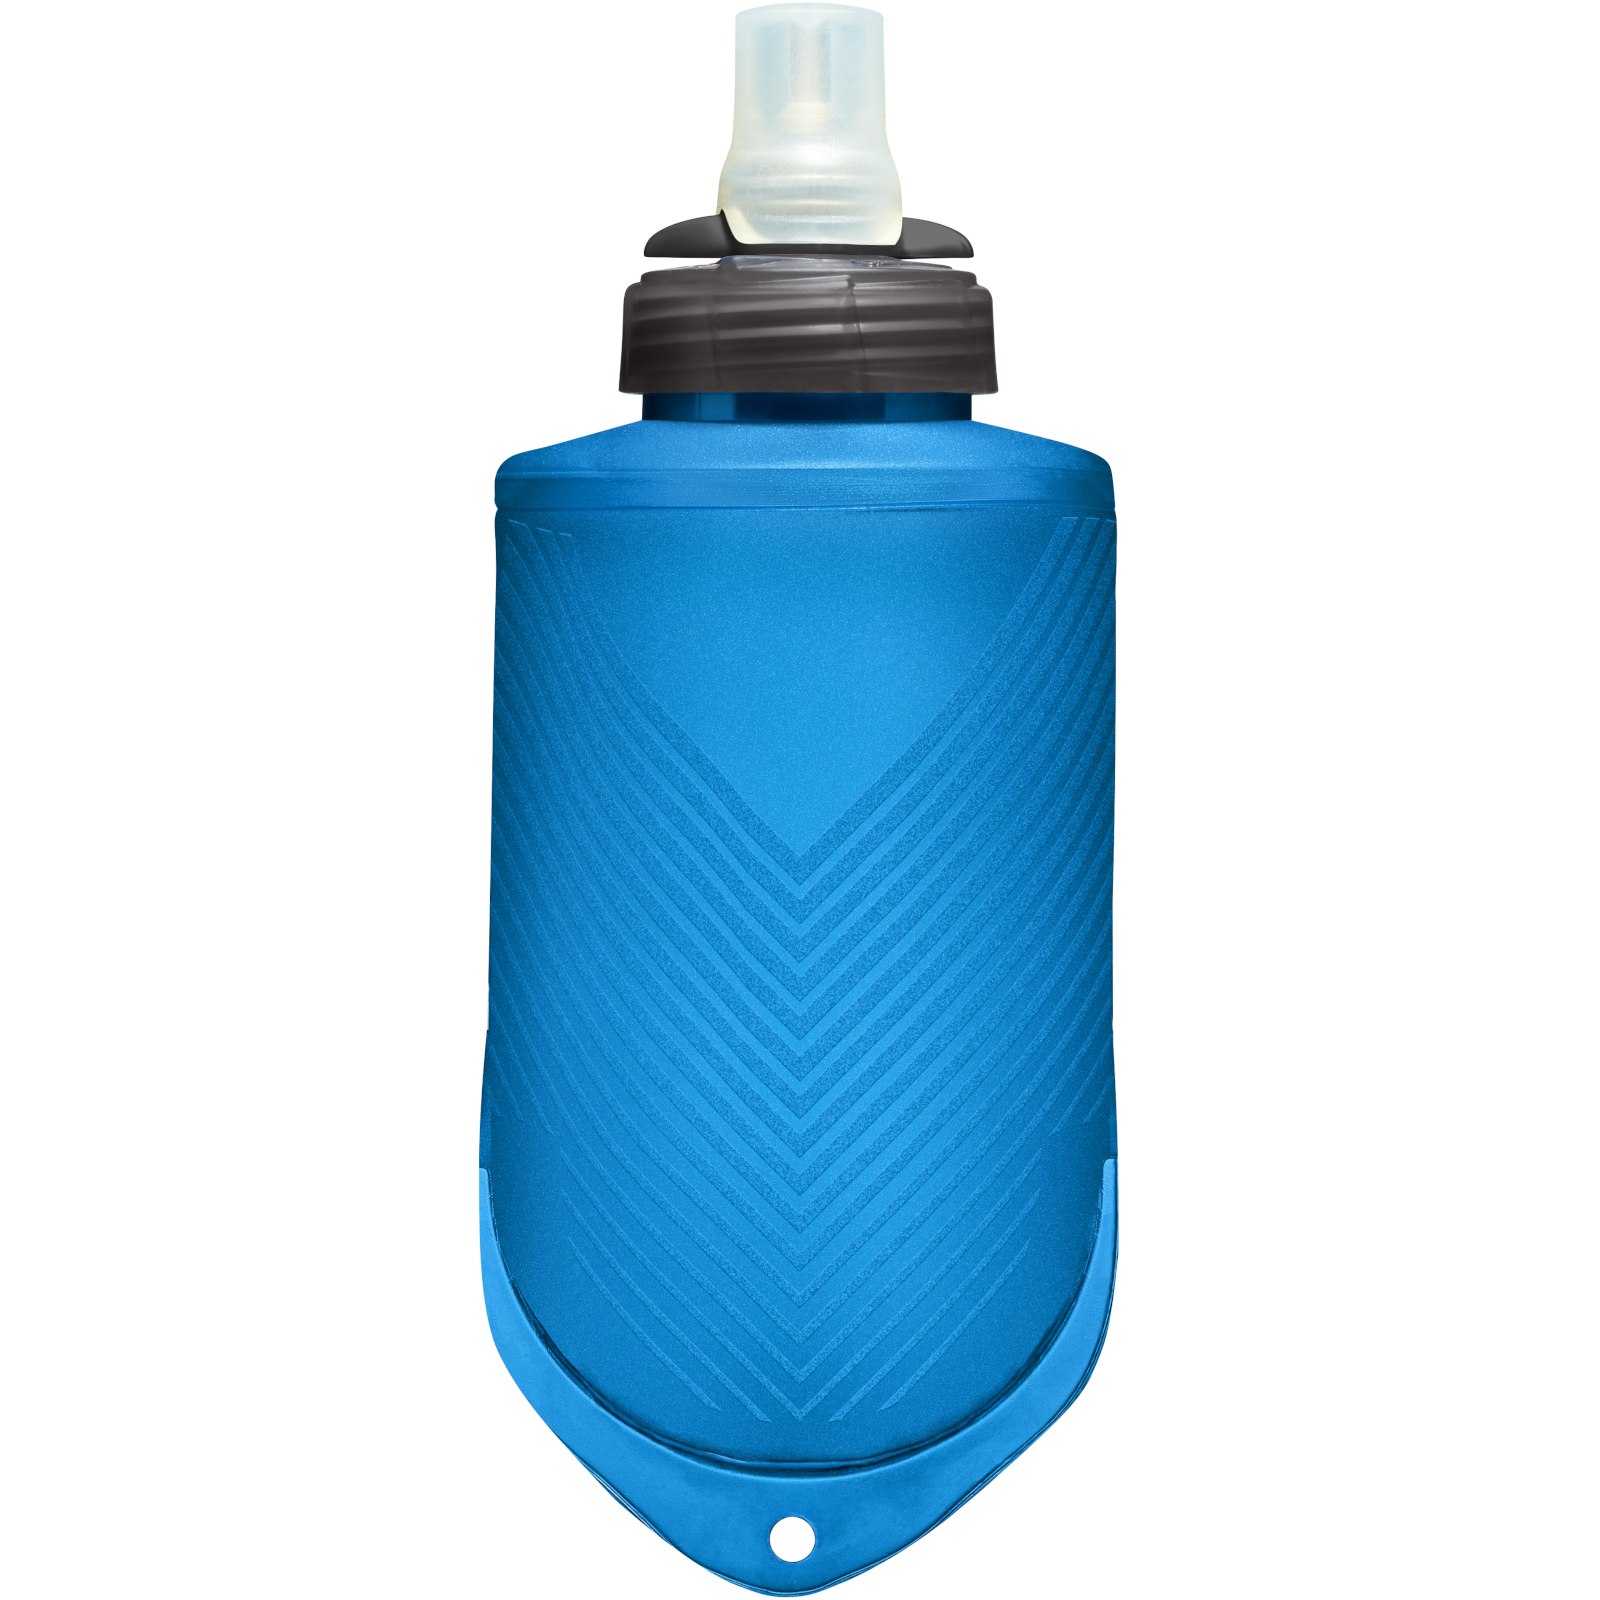 Productfoto van CamelBak Quick Stow Flask Bottle 355ml - Blue